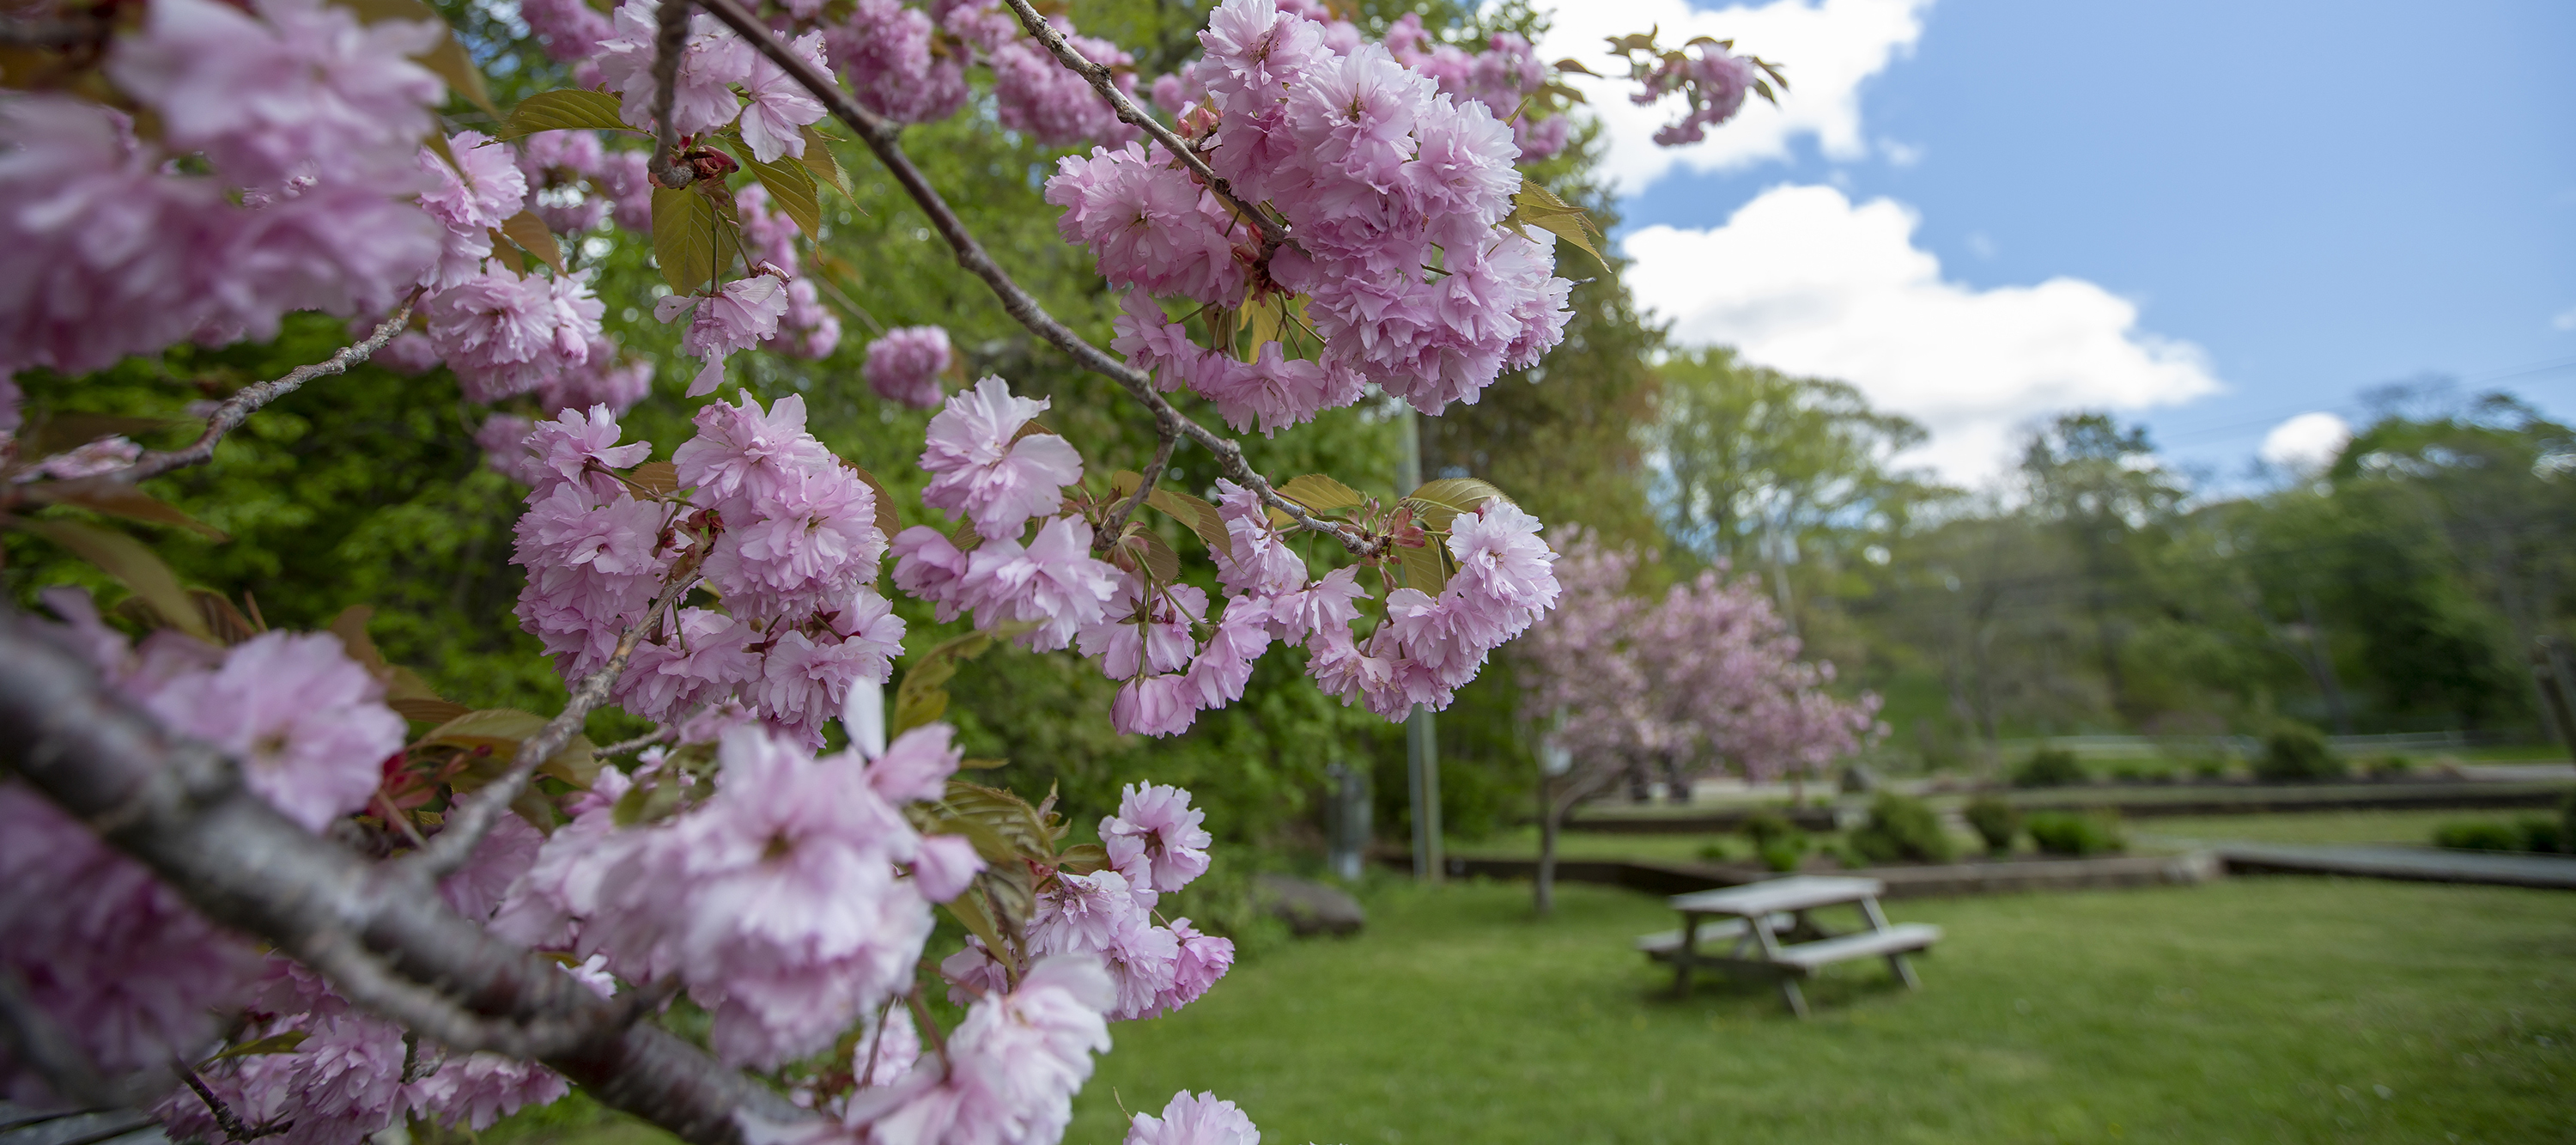 Cherry blossoms in a Kentville park